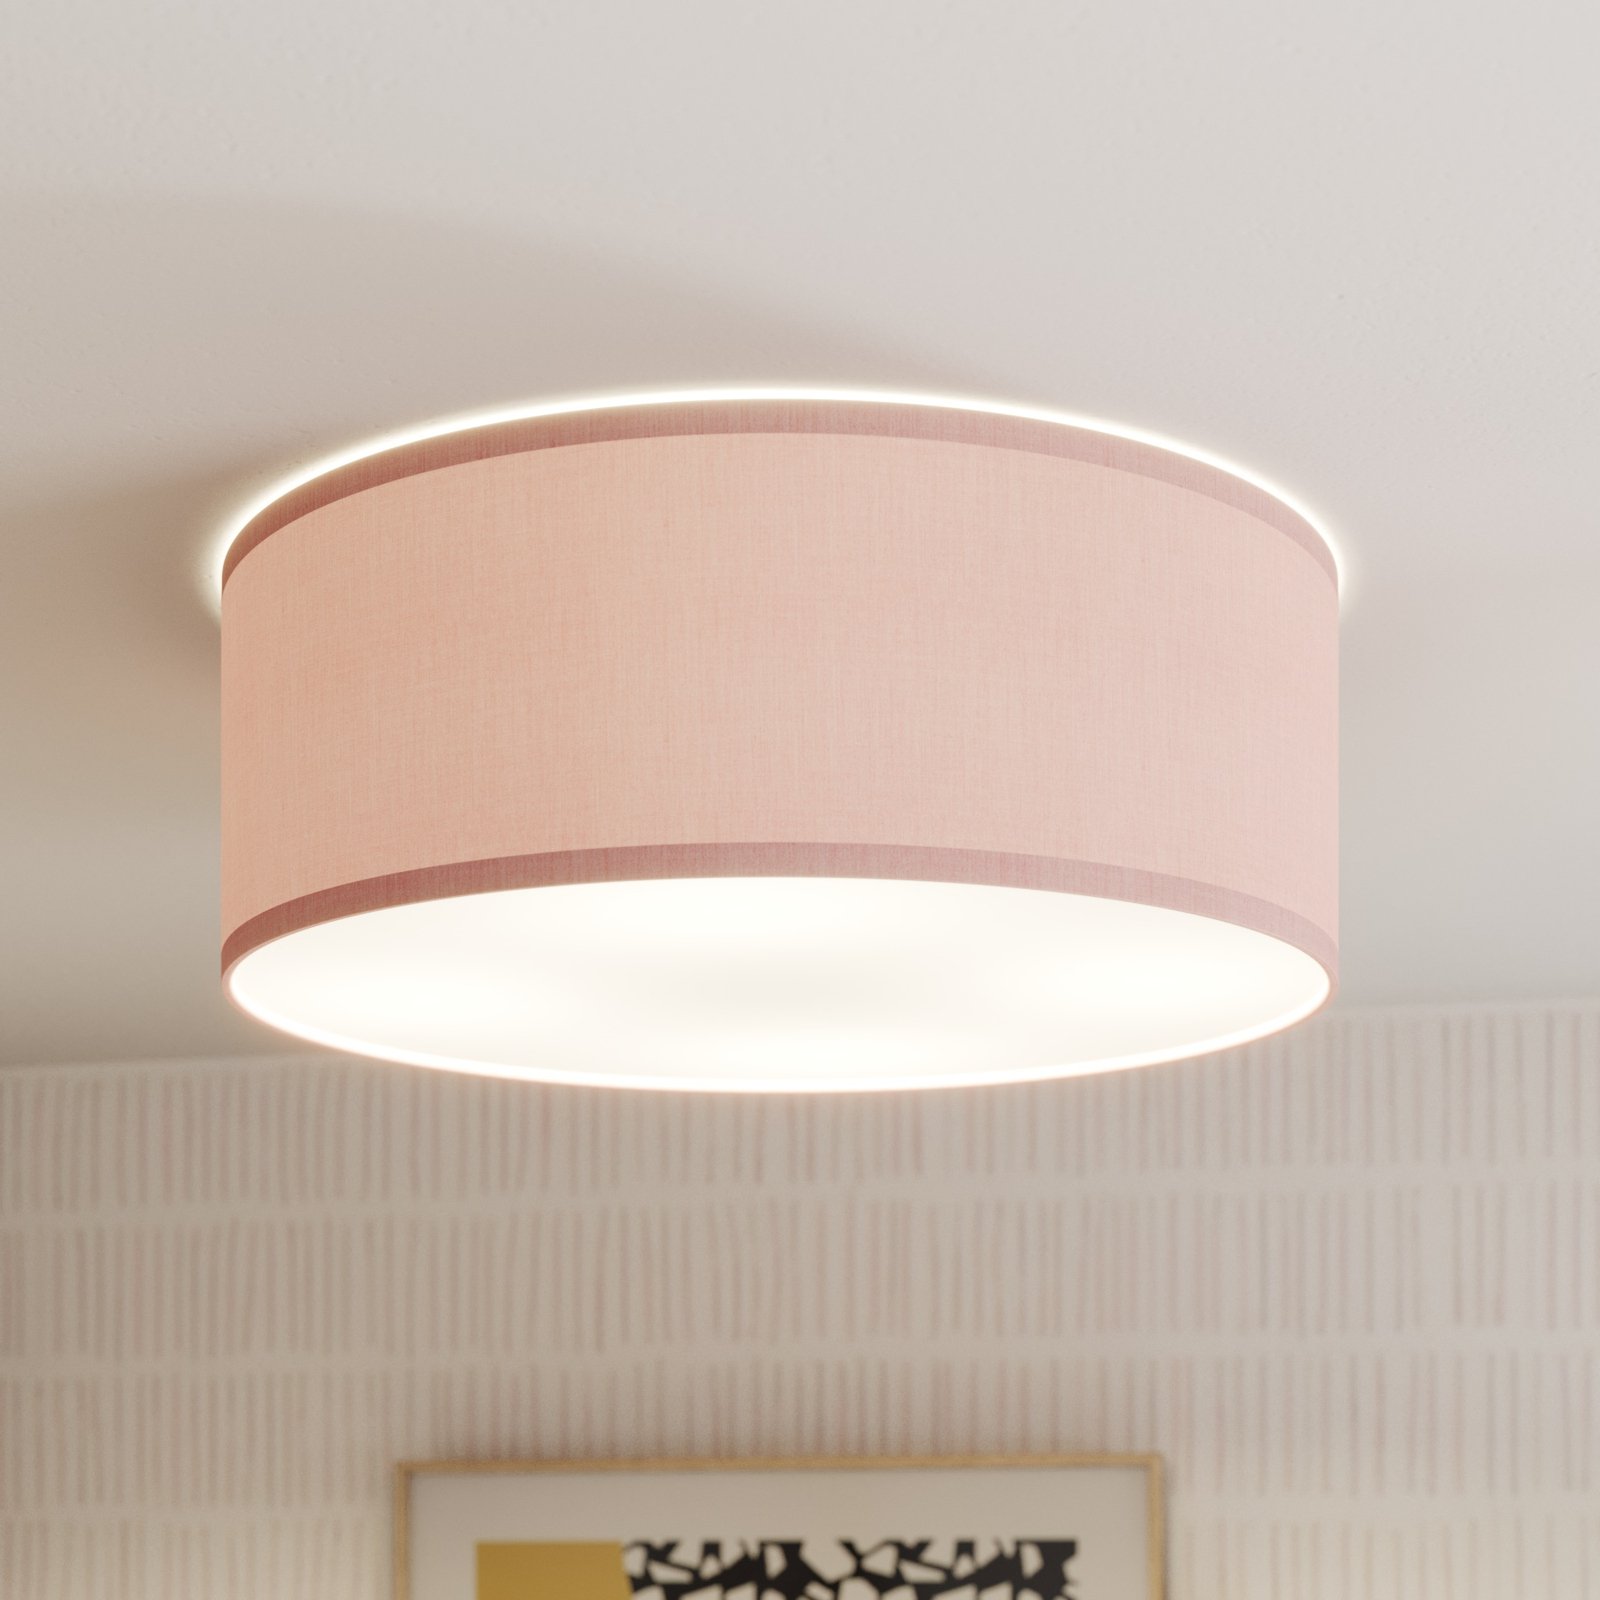 Rondo Kids plafondlamp, Ø 38 cm, roze